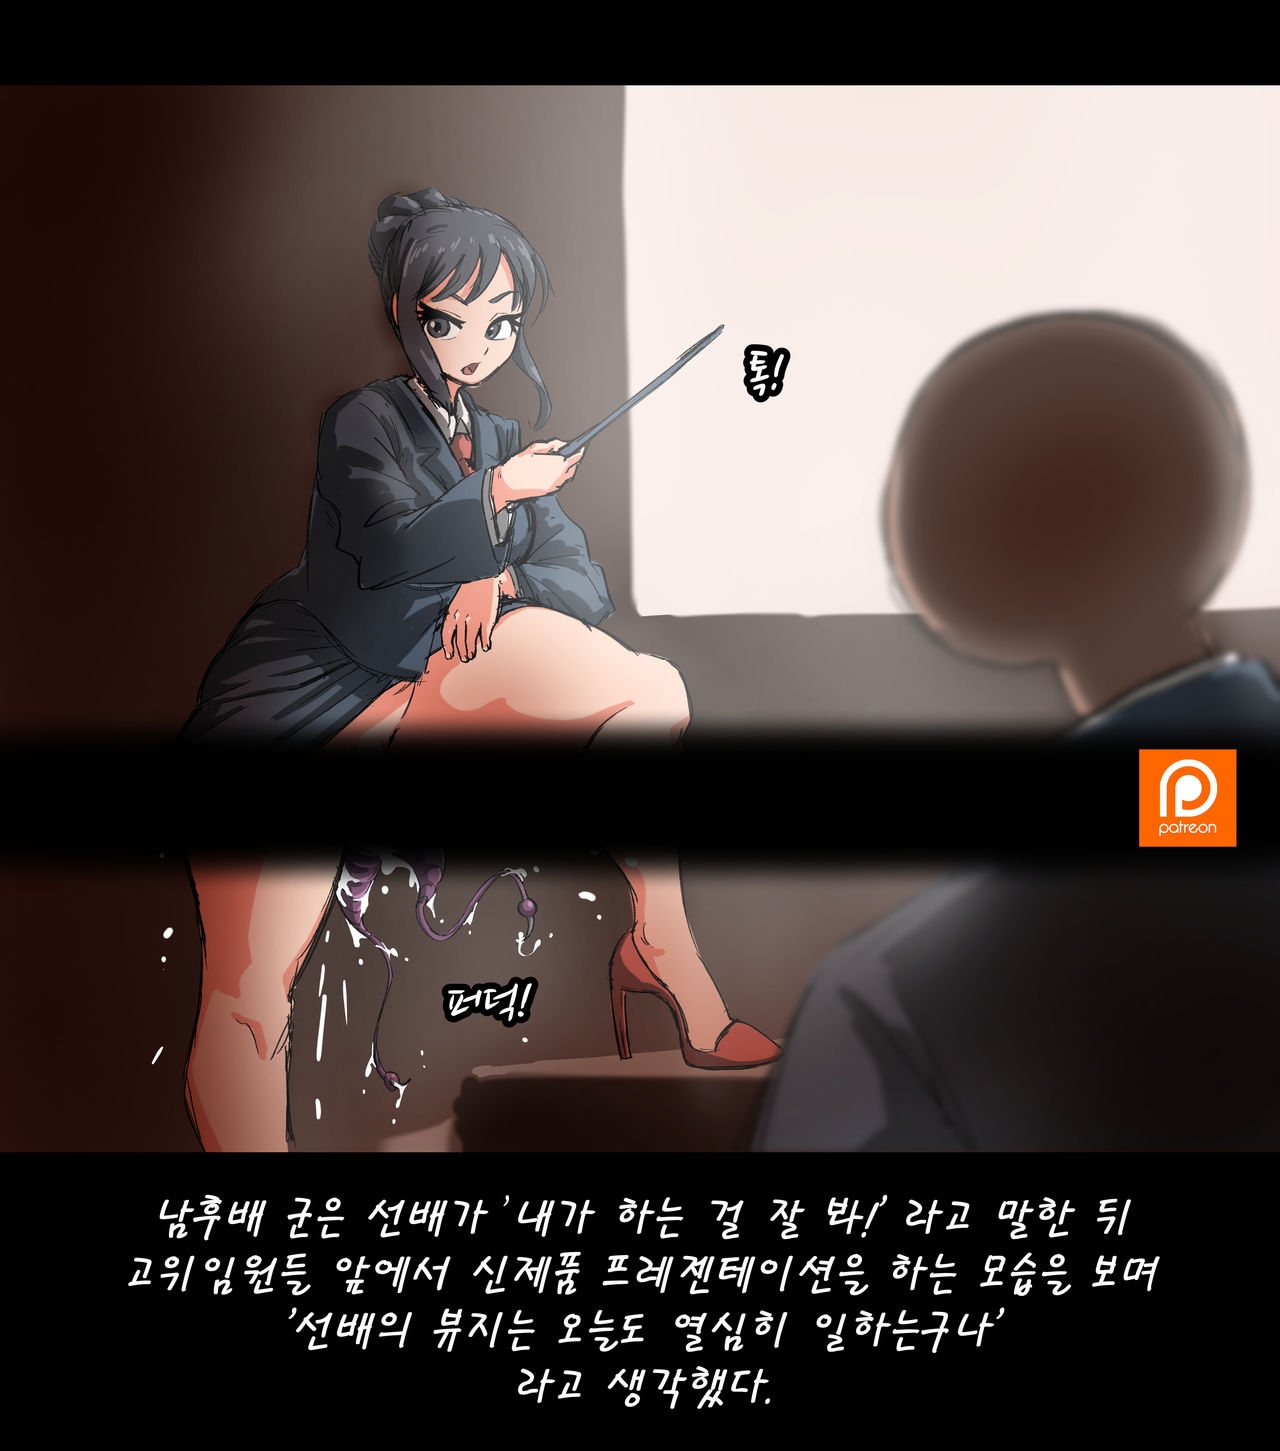 [Woohyoot] Sunbae n Hubae #1 [Korean, English] 8